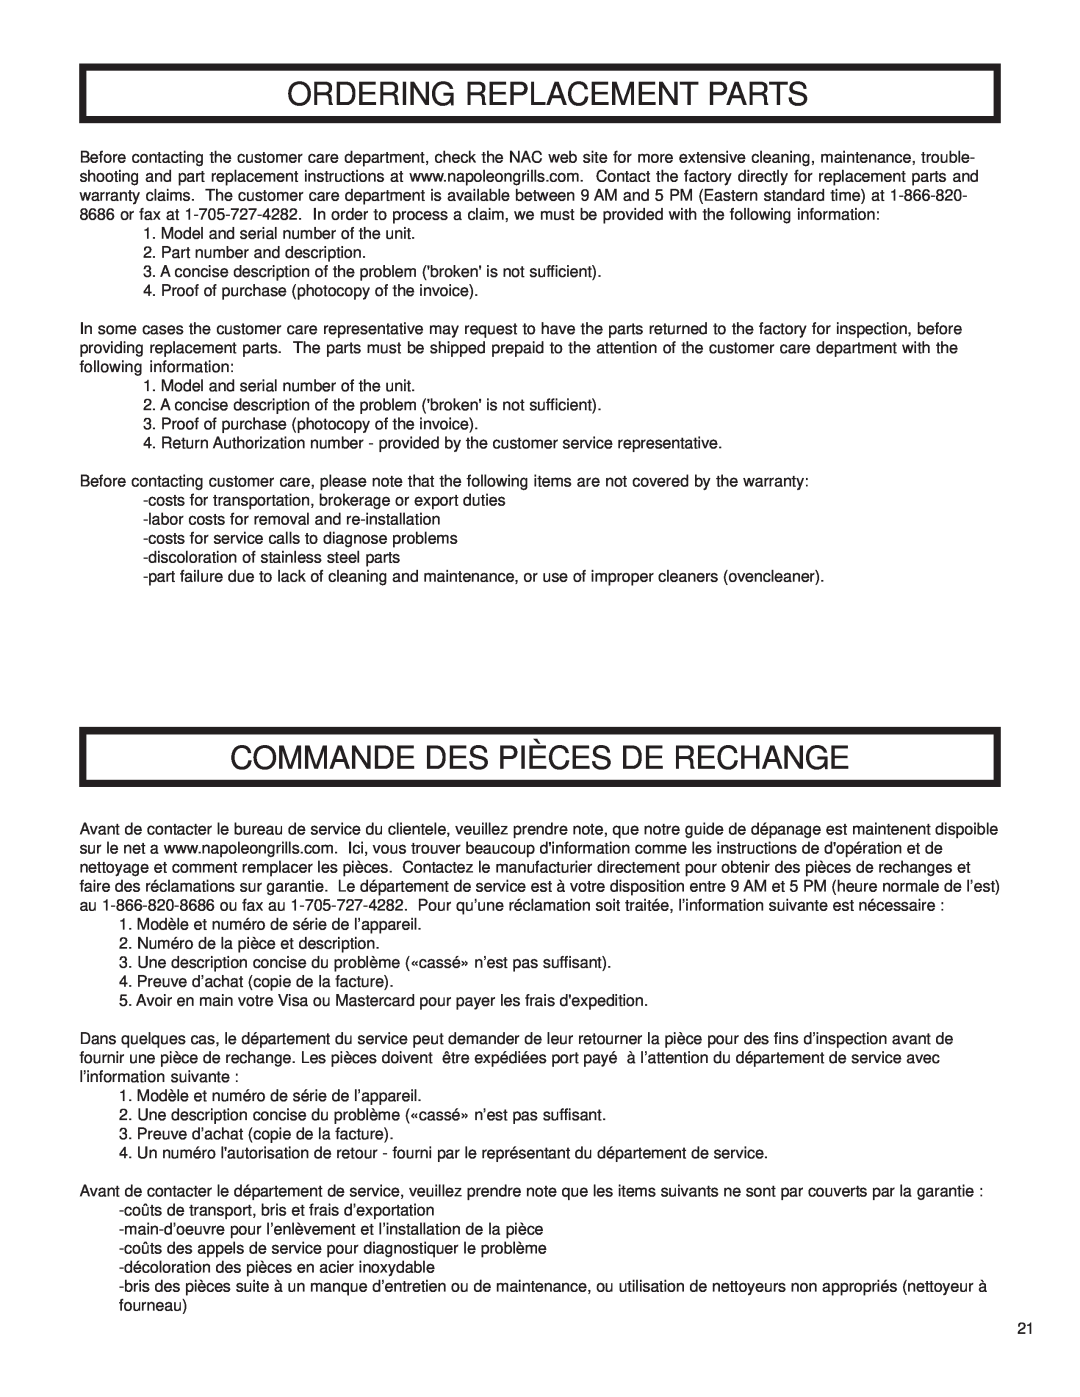 Napoleon Grills 2032-OS, 204830-OS, 3068-OS, 2048-OS manual Ordering Replacement Parts, Commande Des Pièces De Rechange 